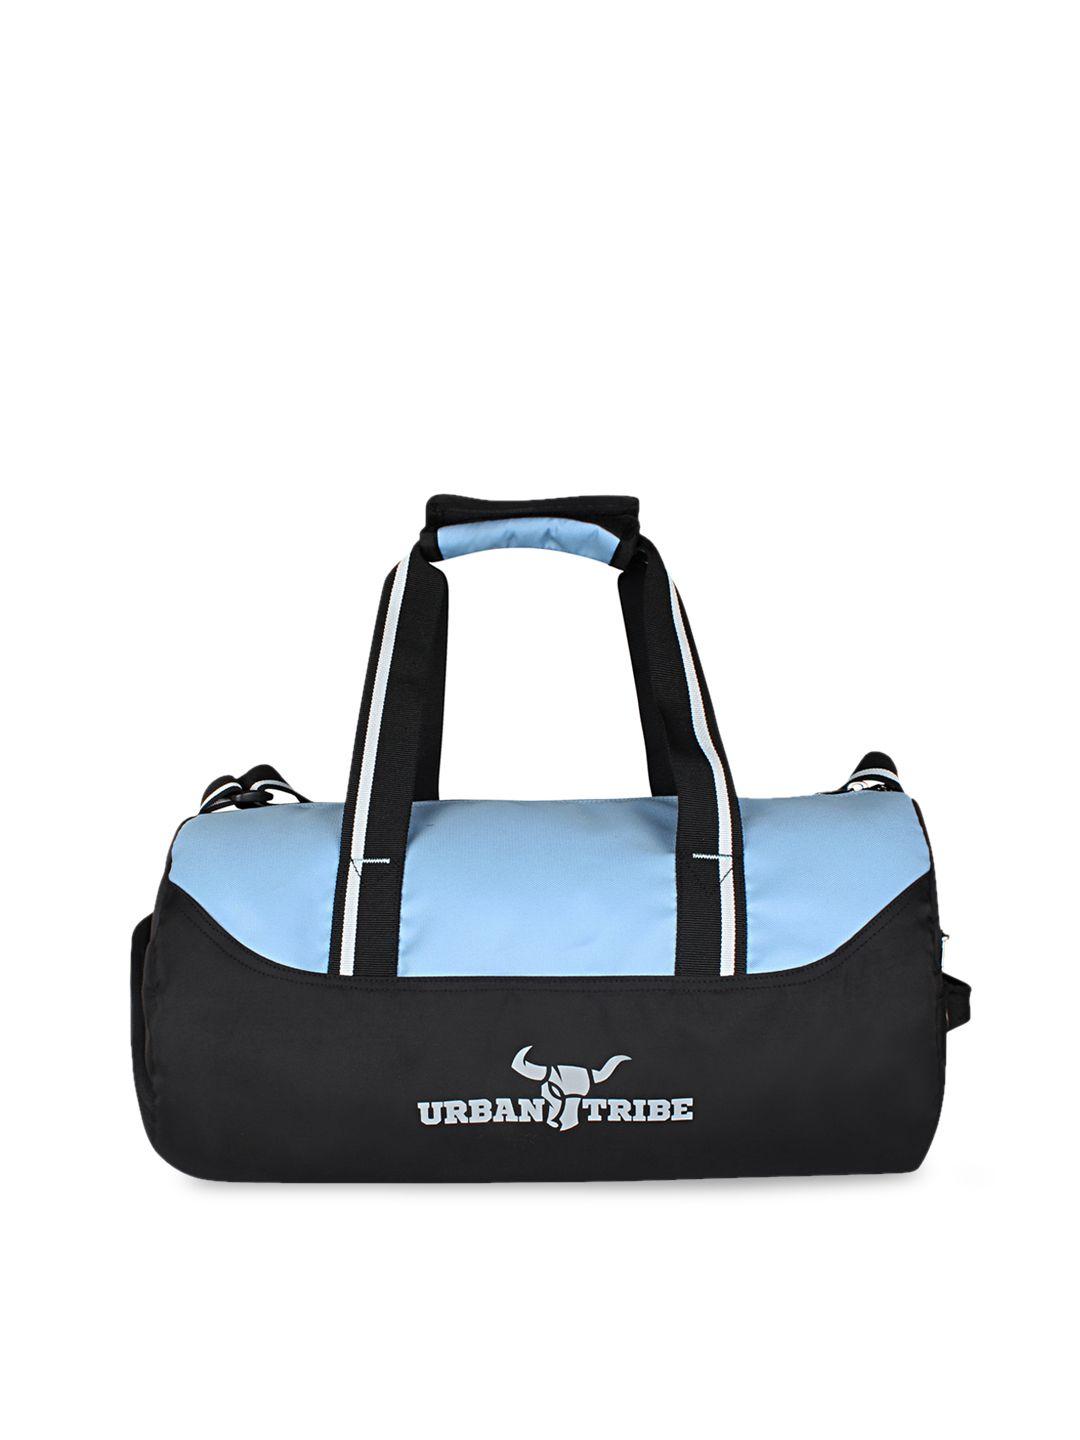 urban tribe navy blue & black colourblocked bolt gym duffel bag